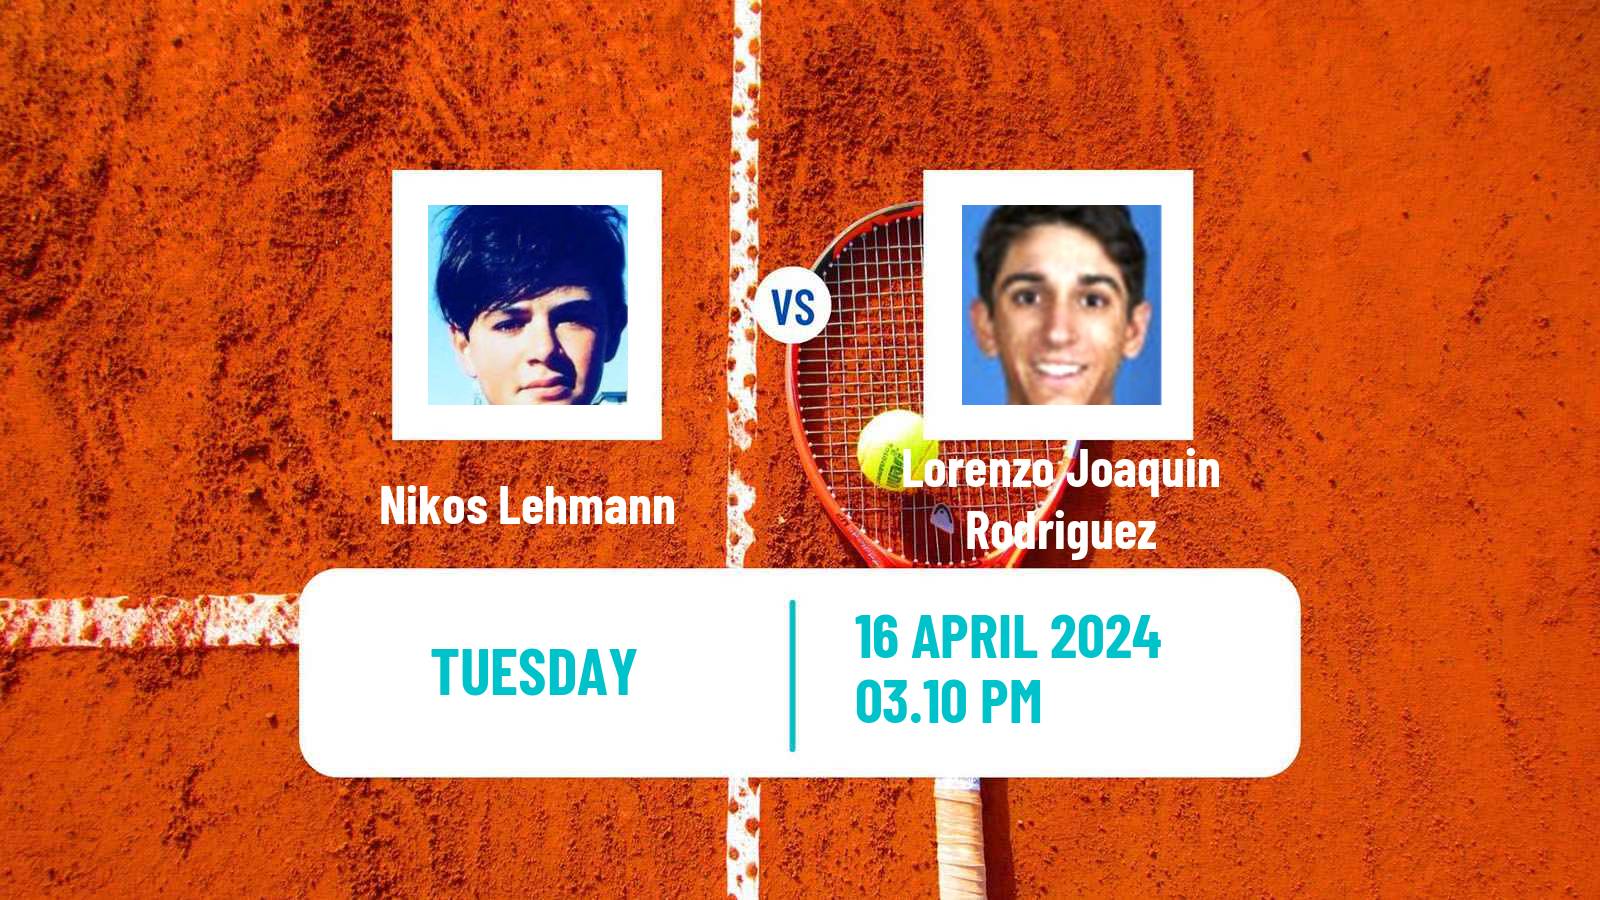 Tennis San Miguel De Tucuman Challenger Men Nikos Lehmann - Lorenzo Joaquin Rodriguez